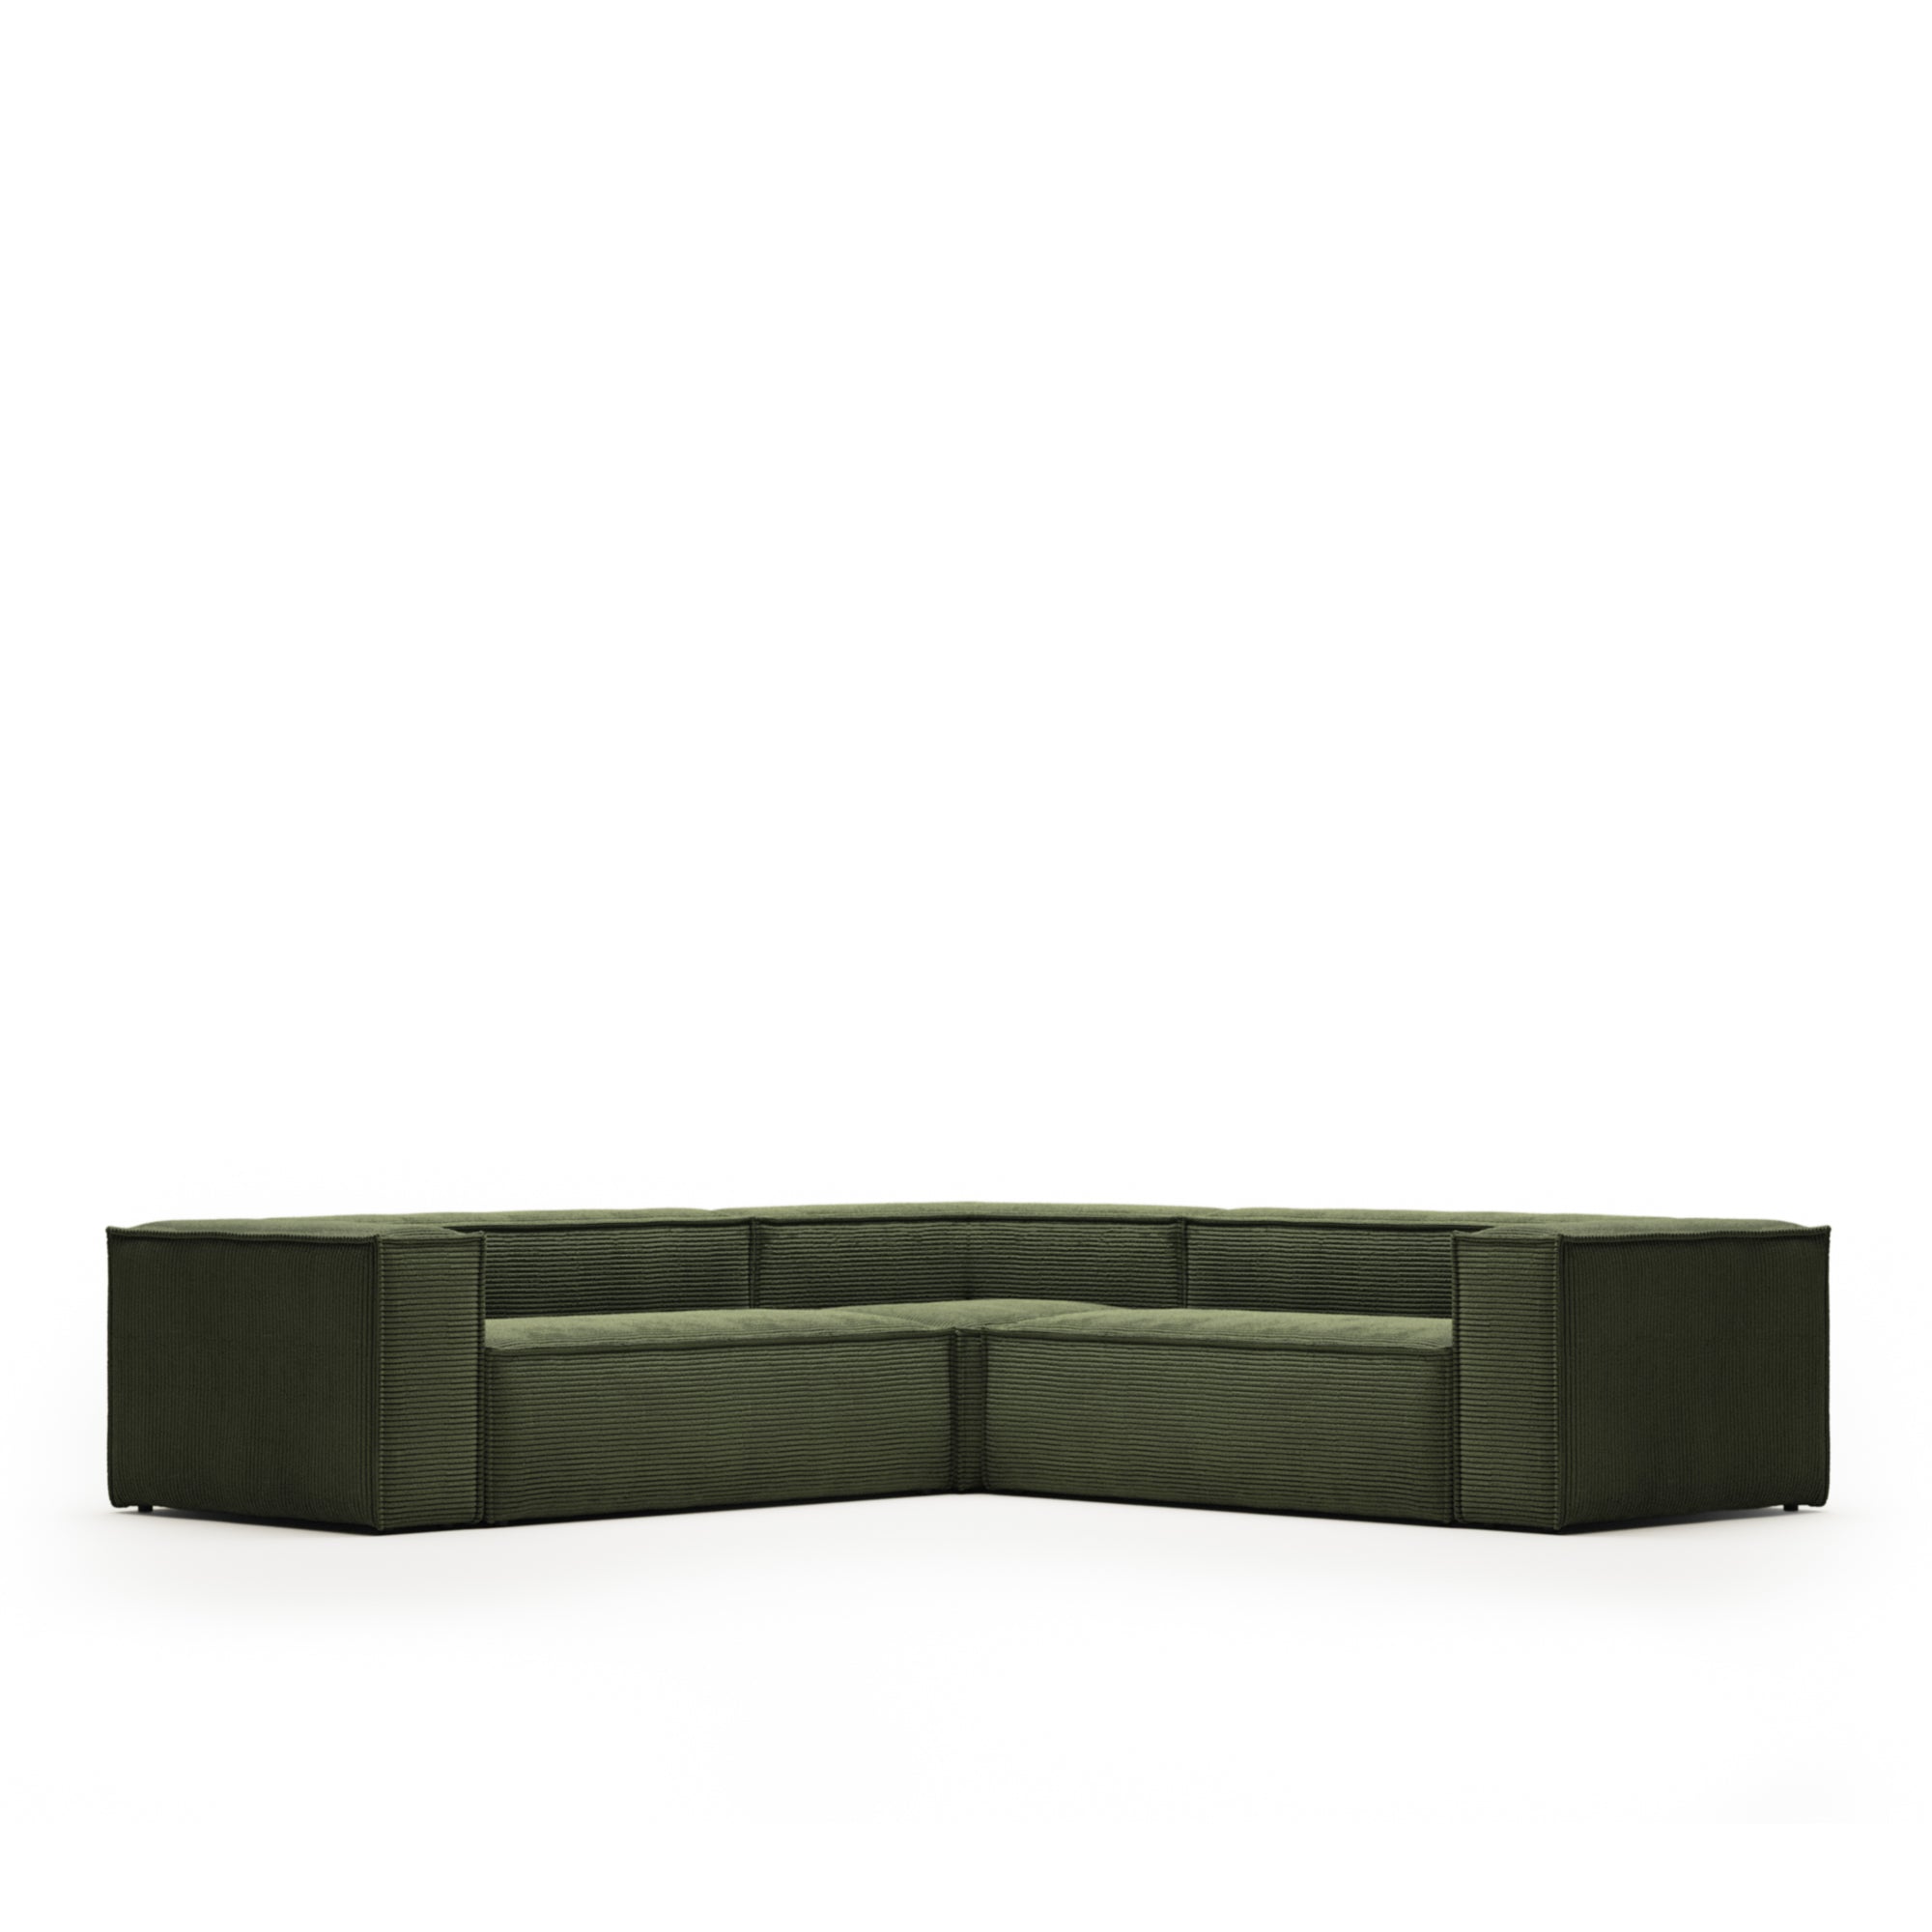 Blok 4 seater corner sofa in wide seam green corduroy, 290 x 290 cm